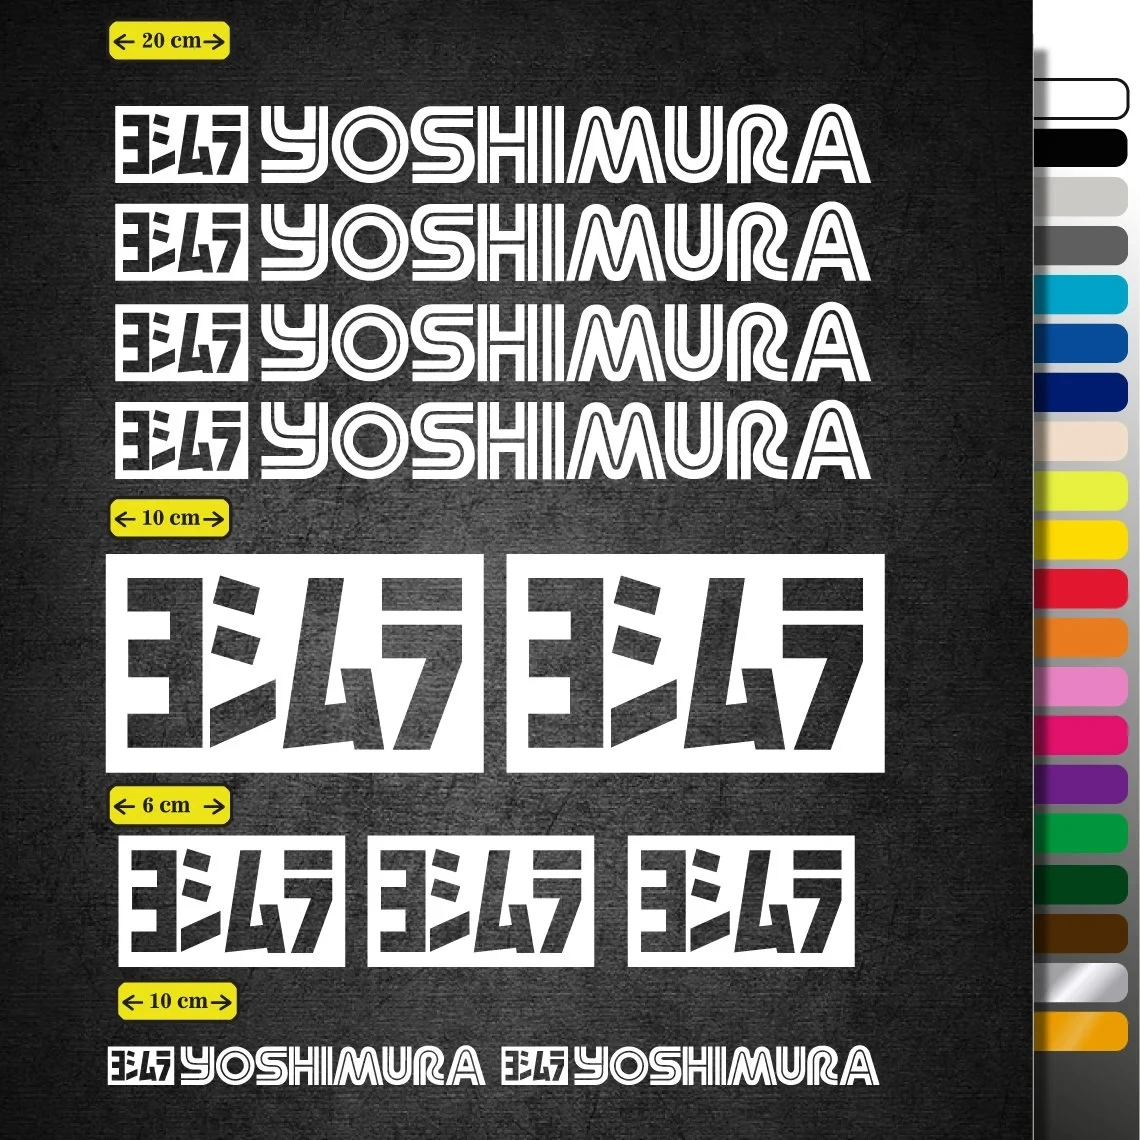 Motor Sponsor Sticker Yoshimura adhesive vinyl Stickers for Car and motorcycle Body Decor